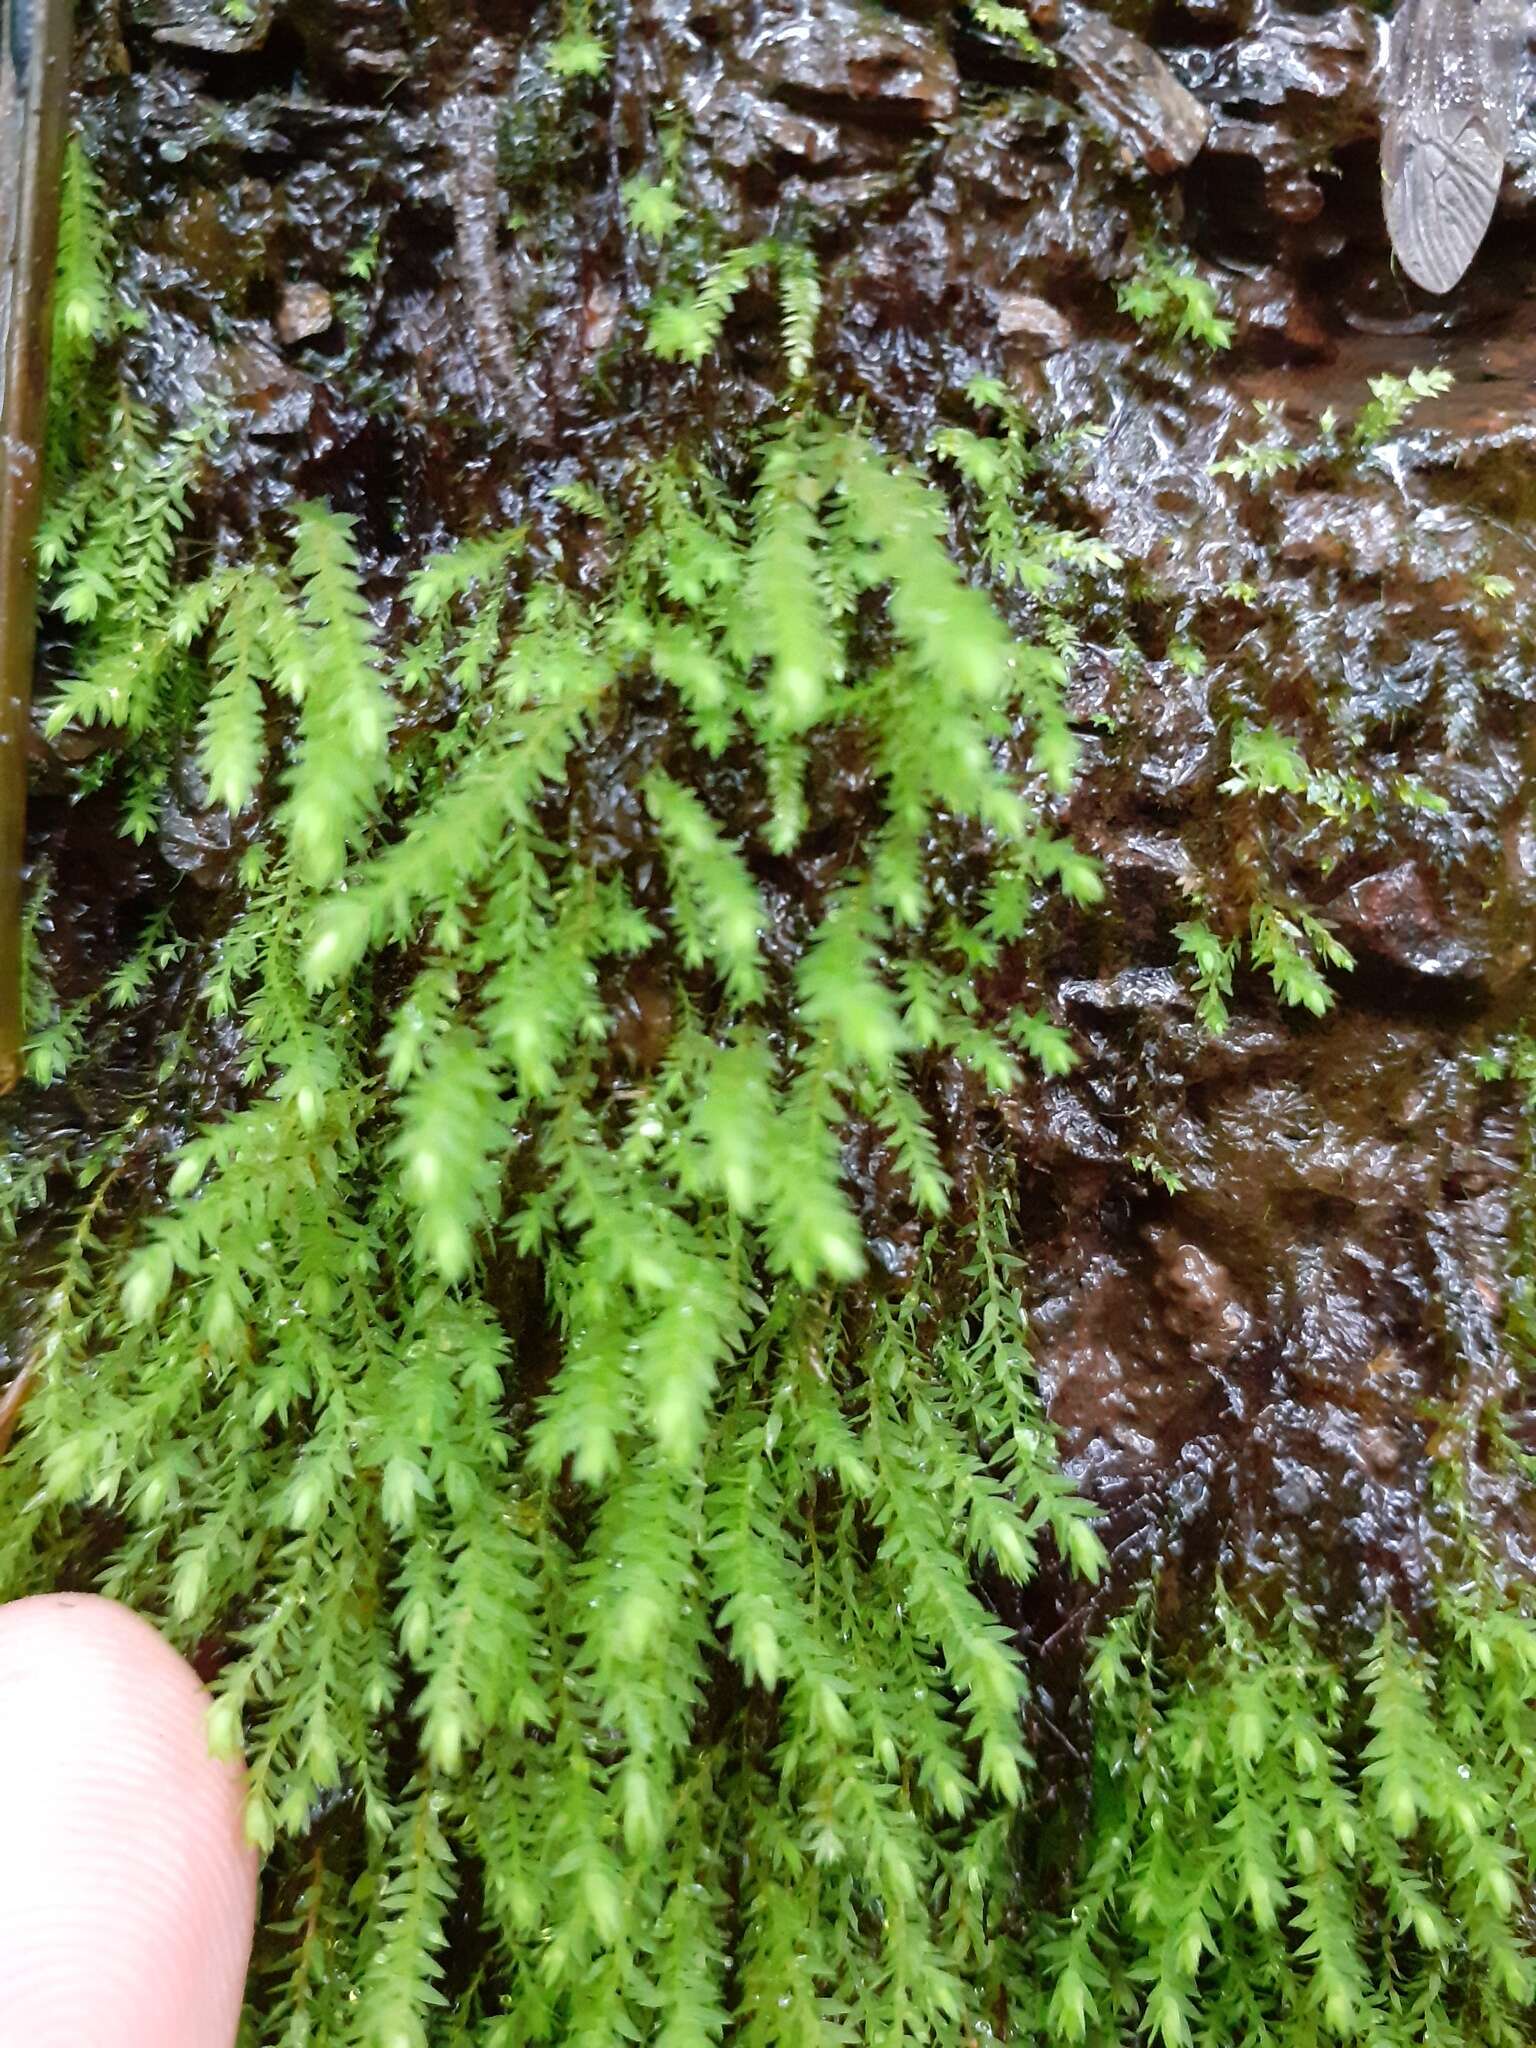 Image of pohlia moss